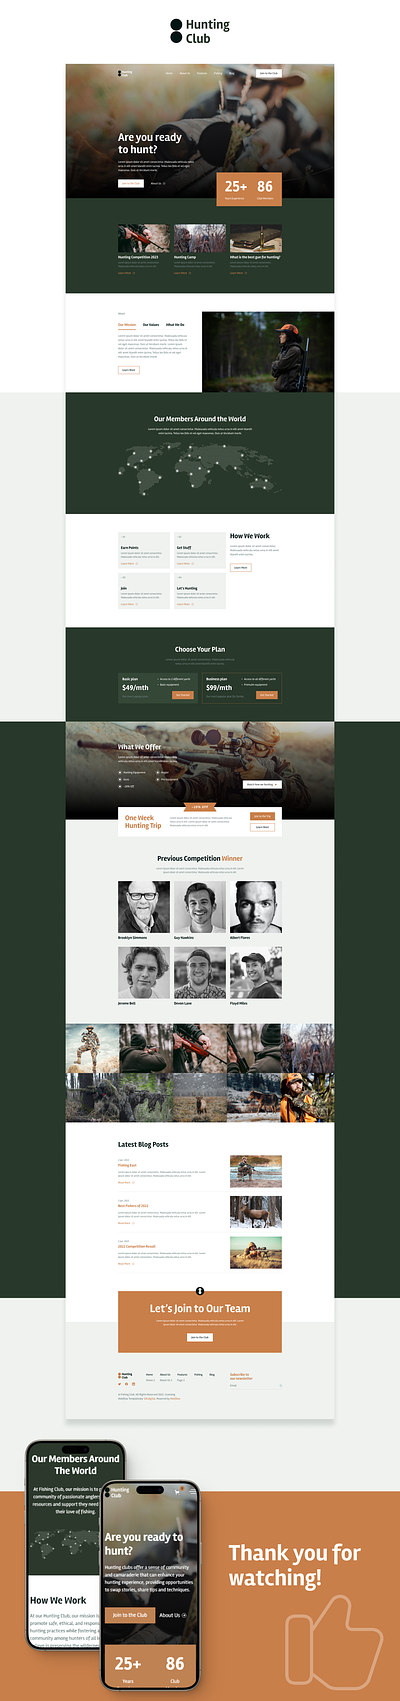 Fishing and Hunting Club design professional template webdesign webflow webflow development webflow website